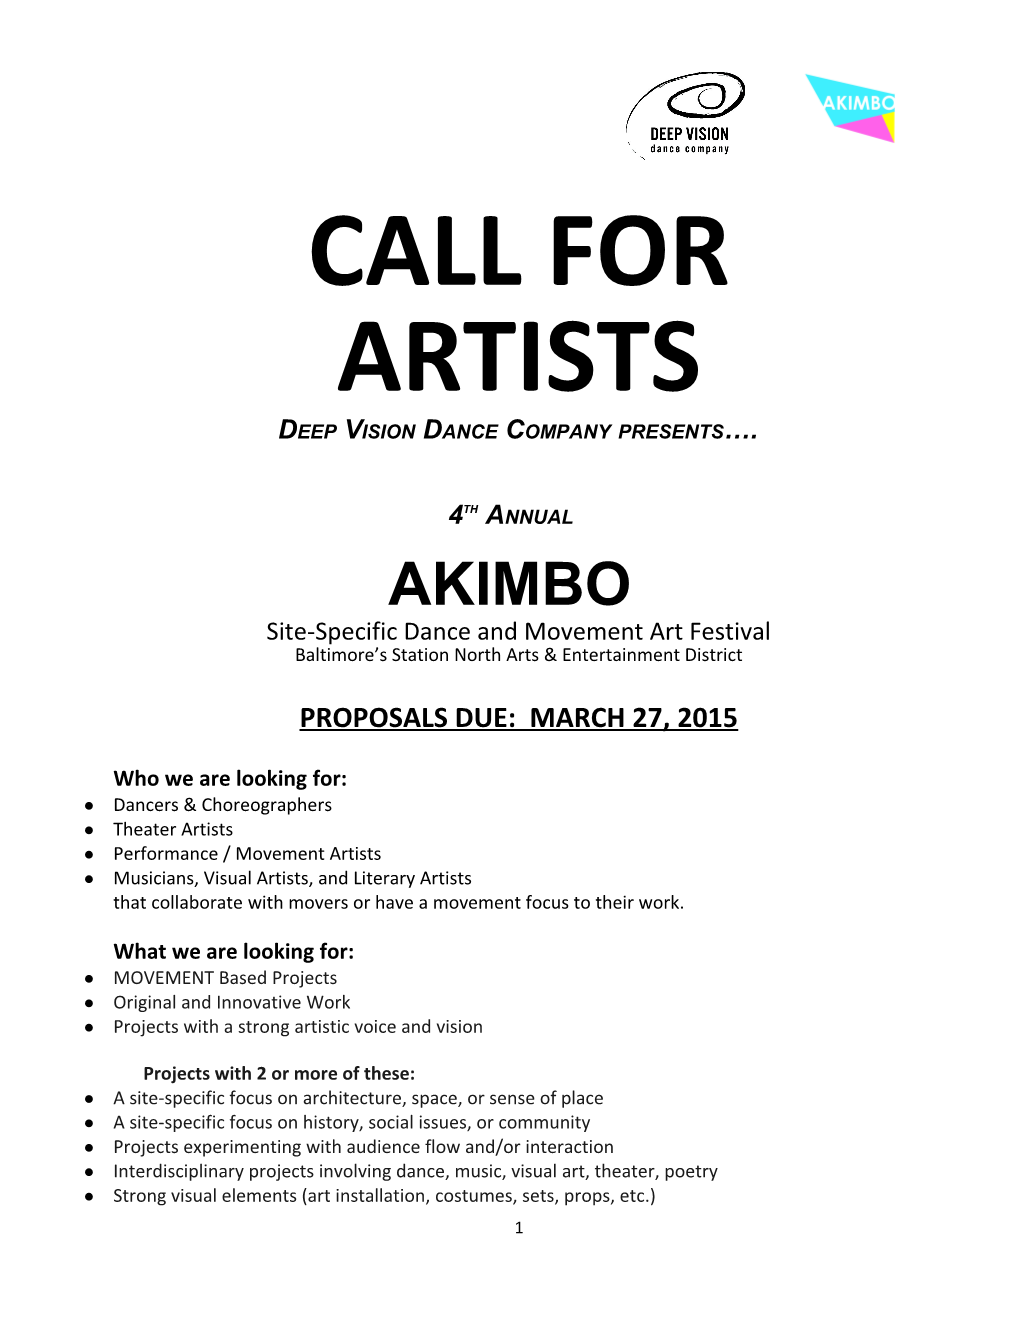 AKIMBO 2015 Call for Artists